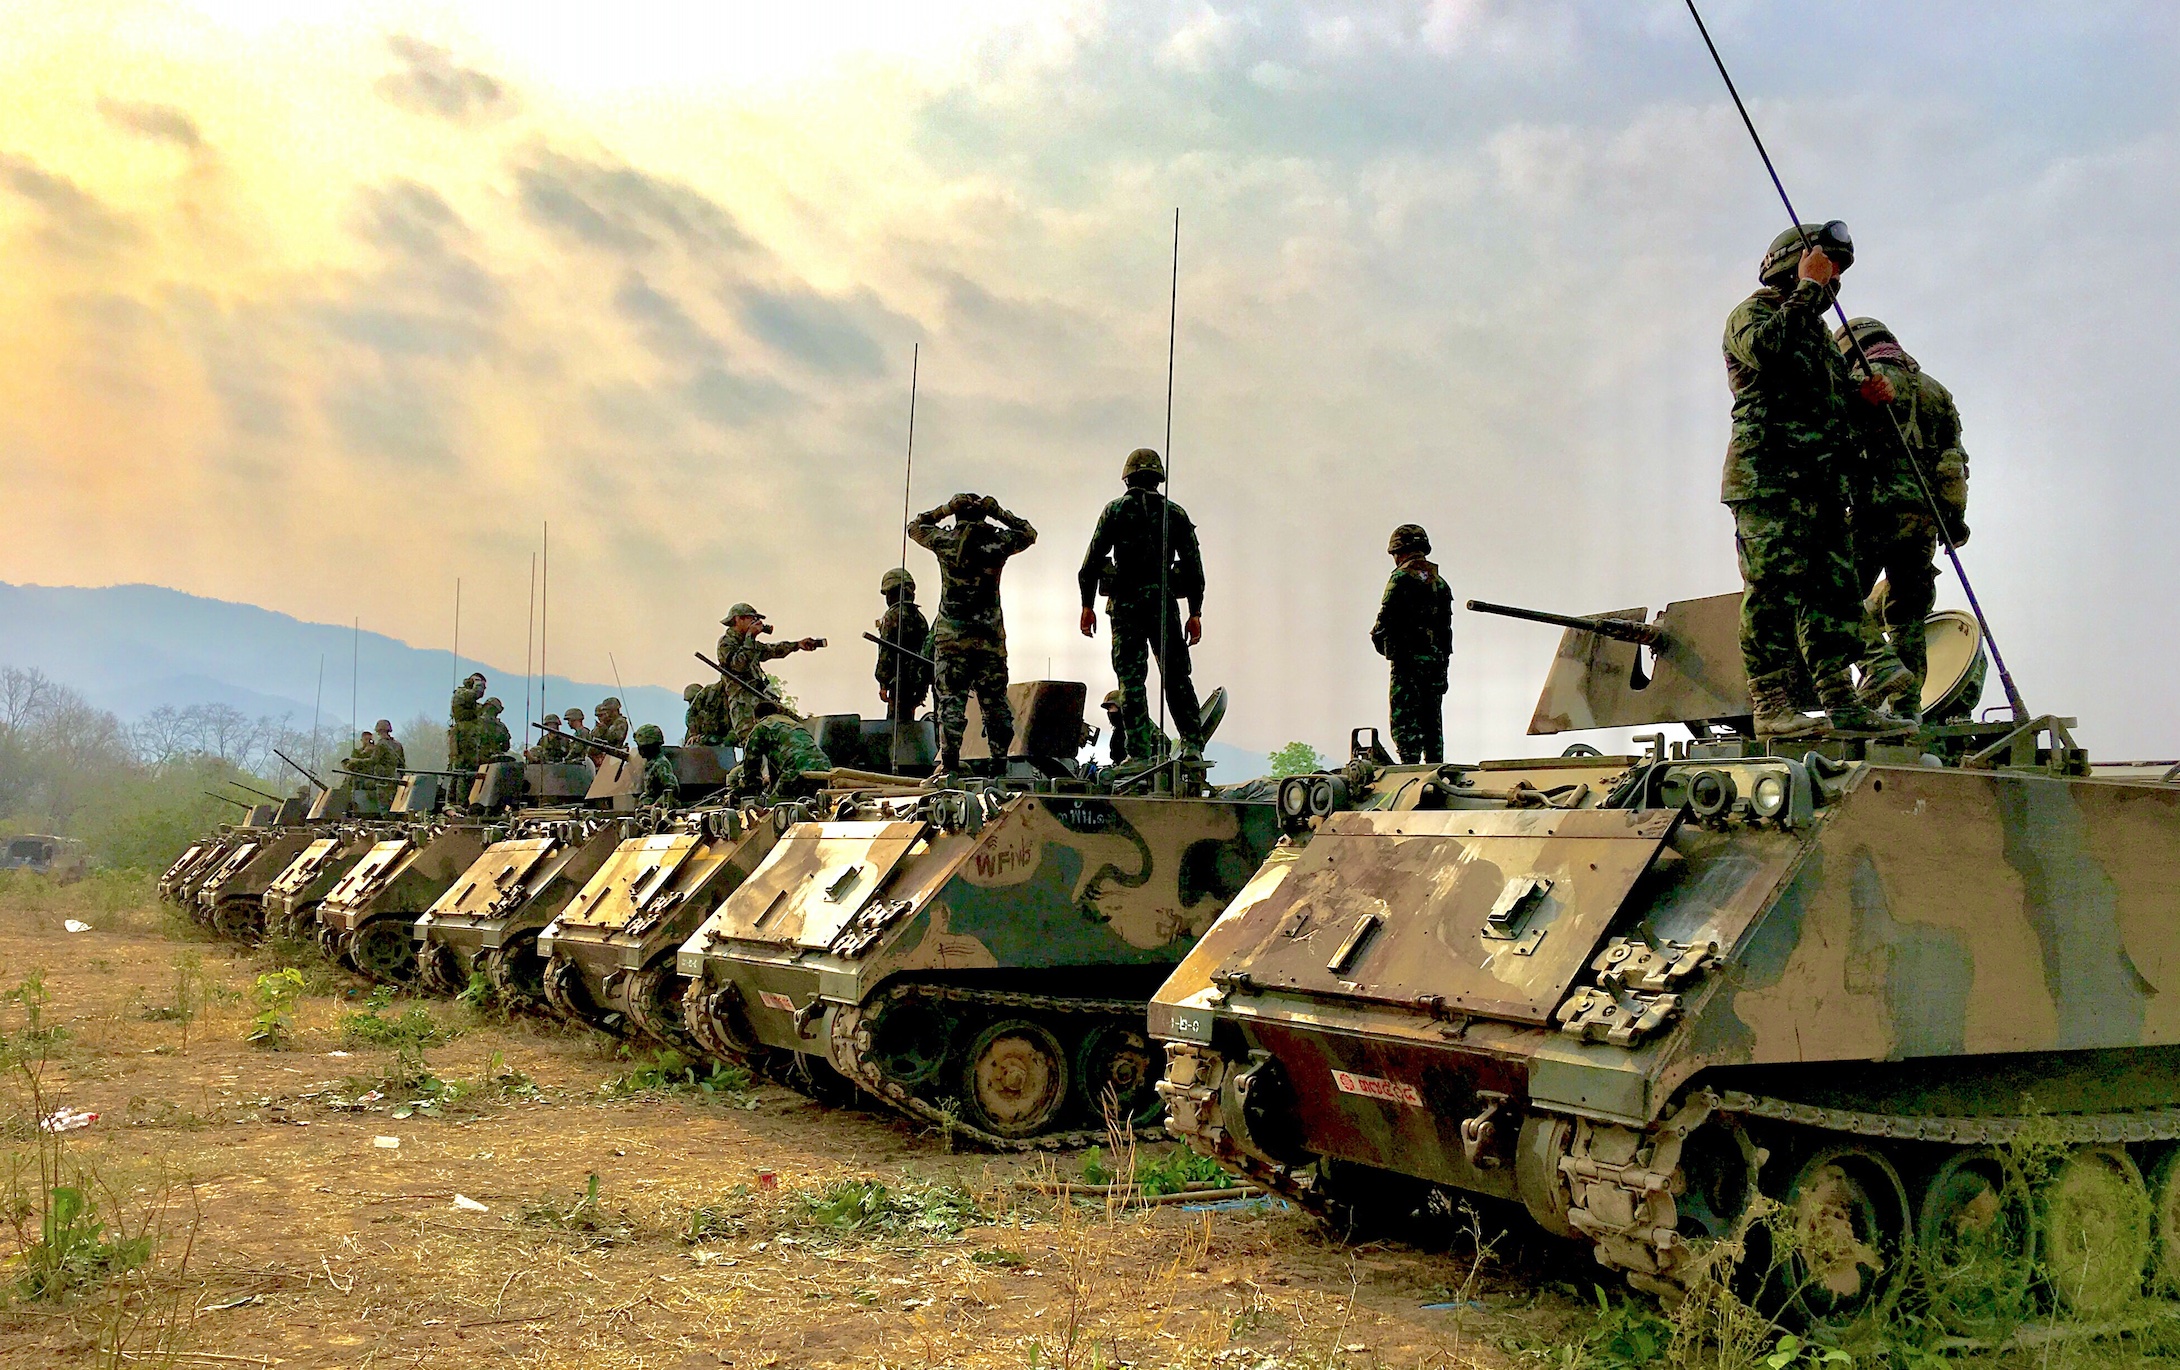 Tanks and troops; image by Chuanchai Pundej, via Unsplash.com.